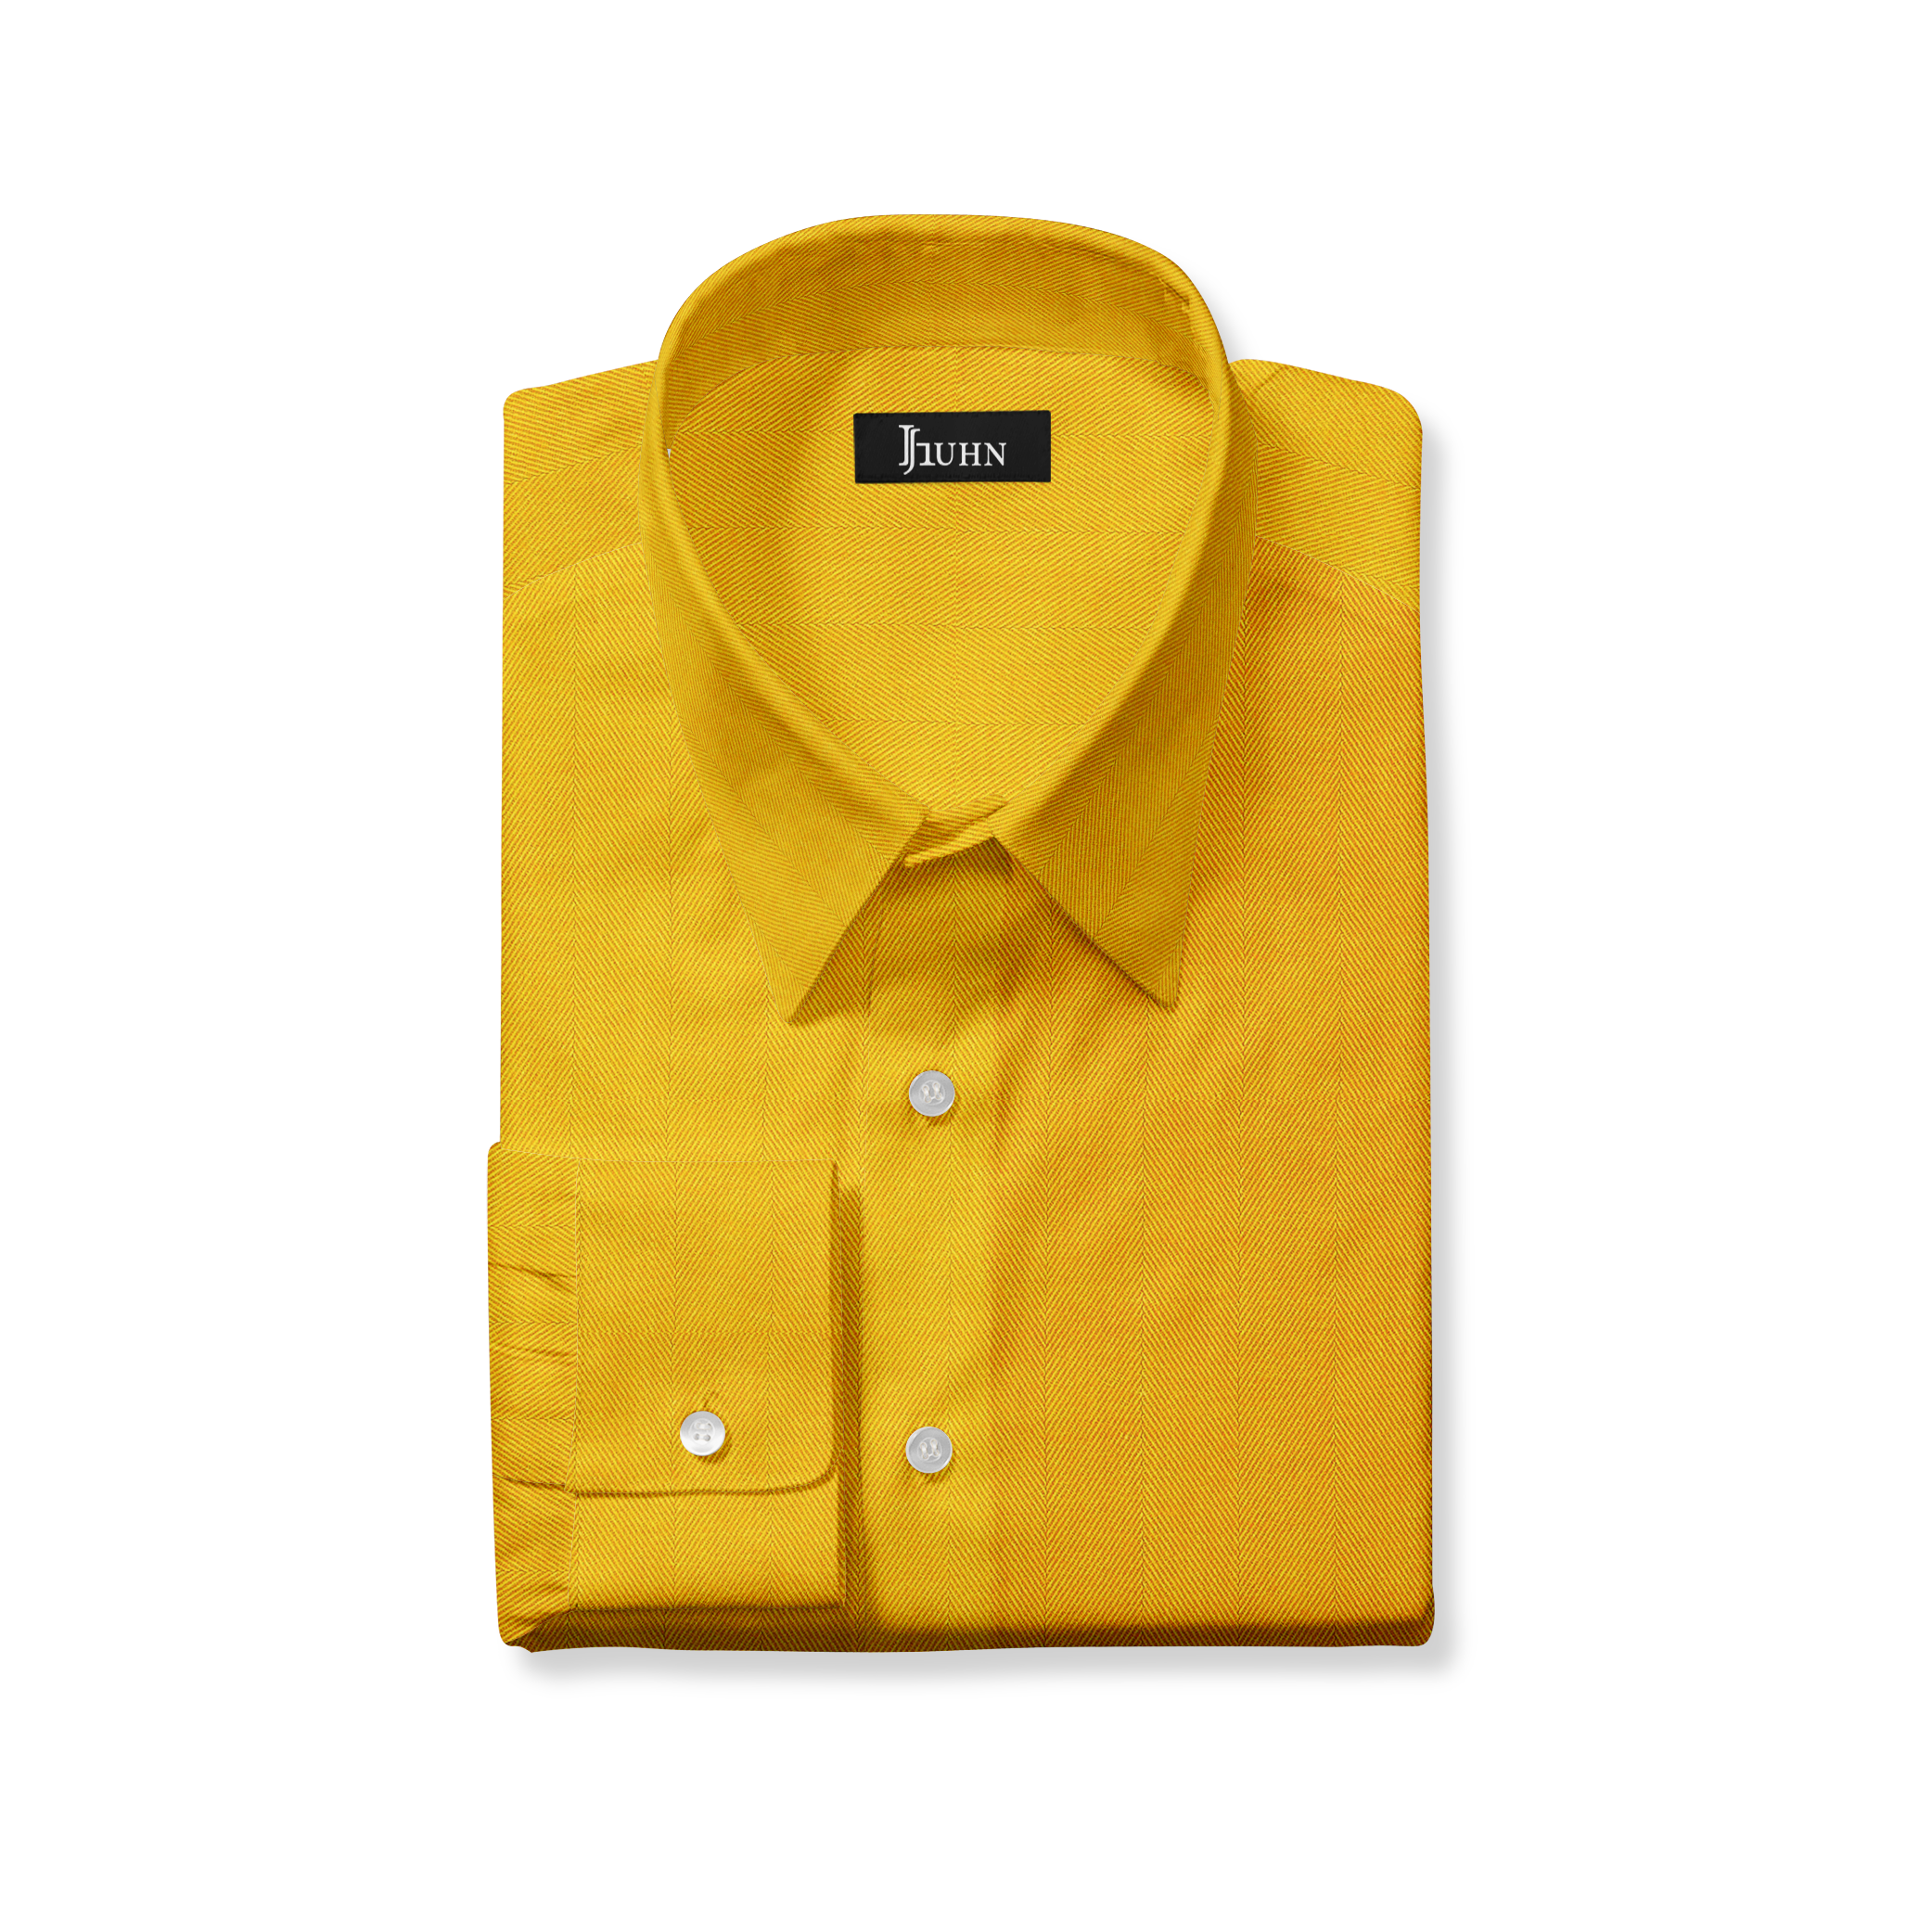 Apres Ski Bright Yellow Shirt – JHuhn Lifestyle: Custom Clothing and  Interior Design